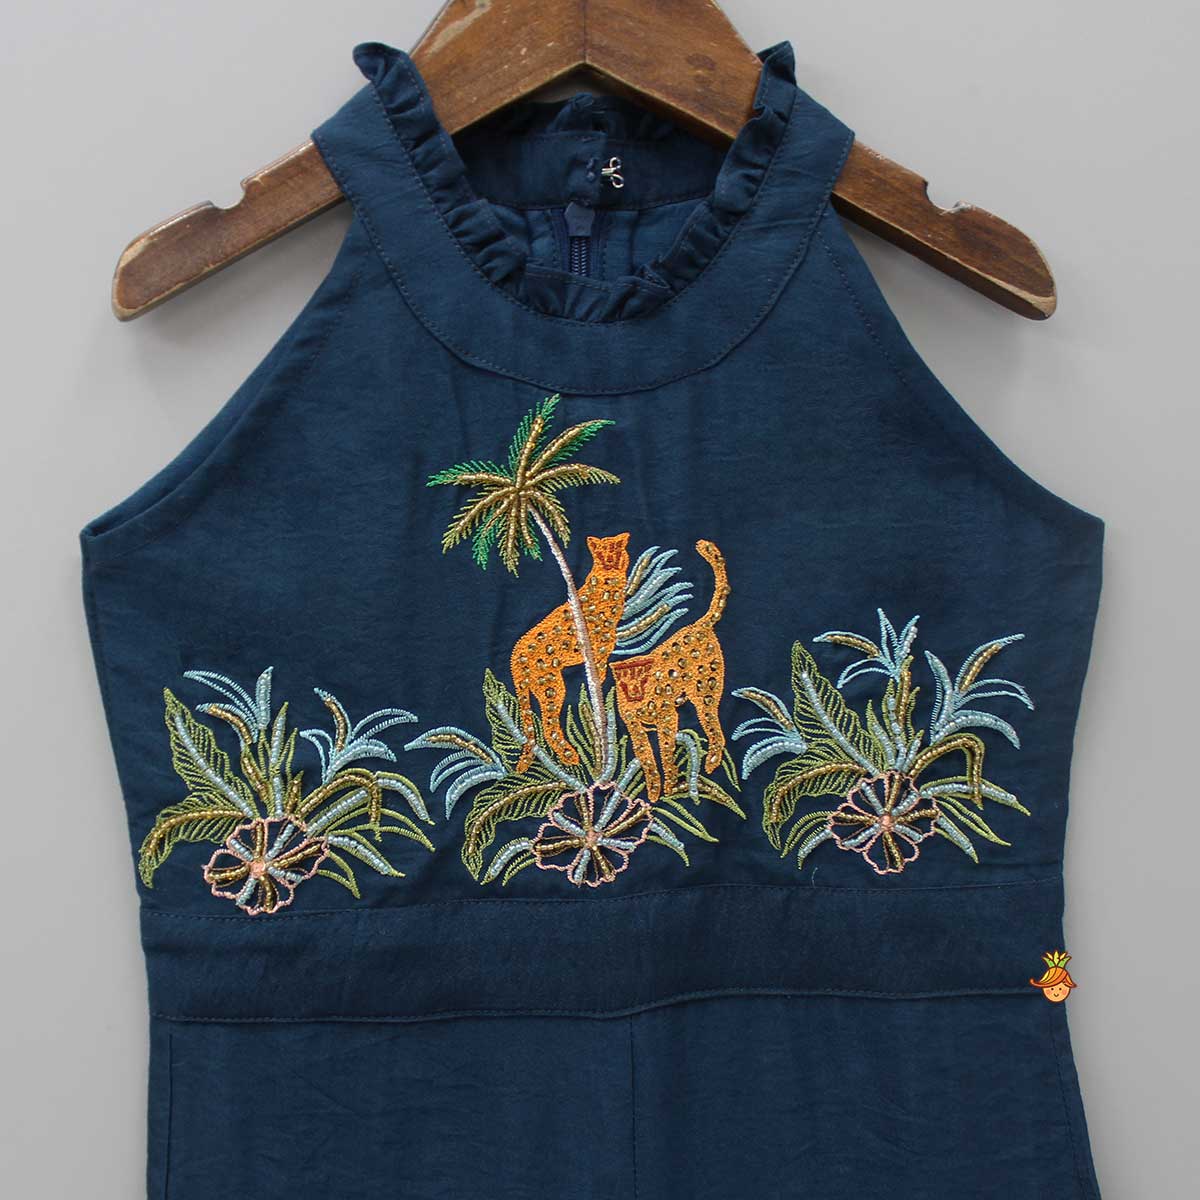 Blue Embroidered Yoke Jumpsuit